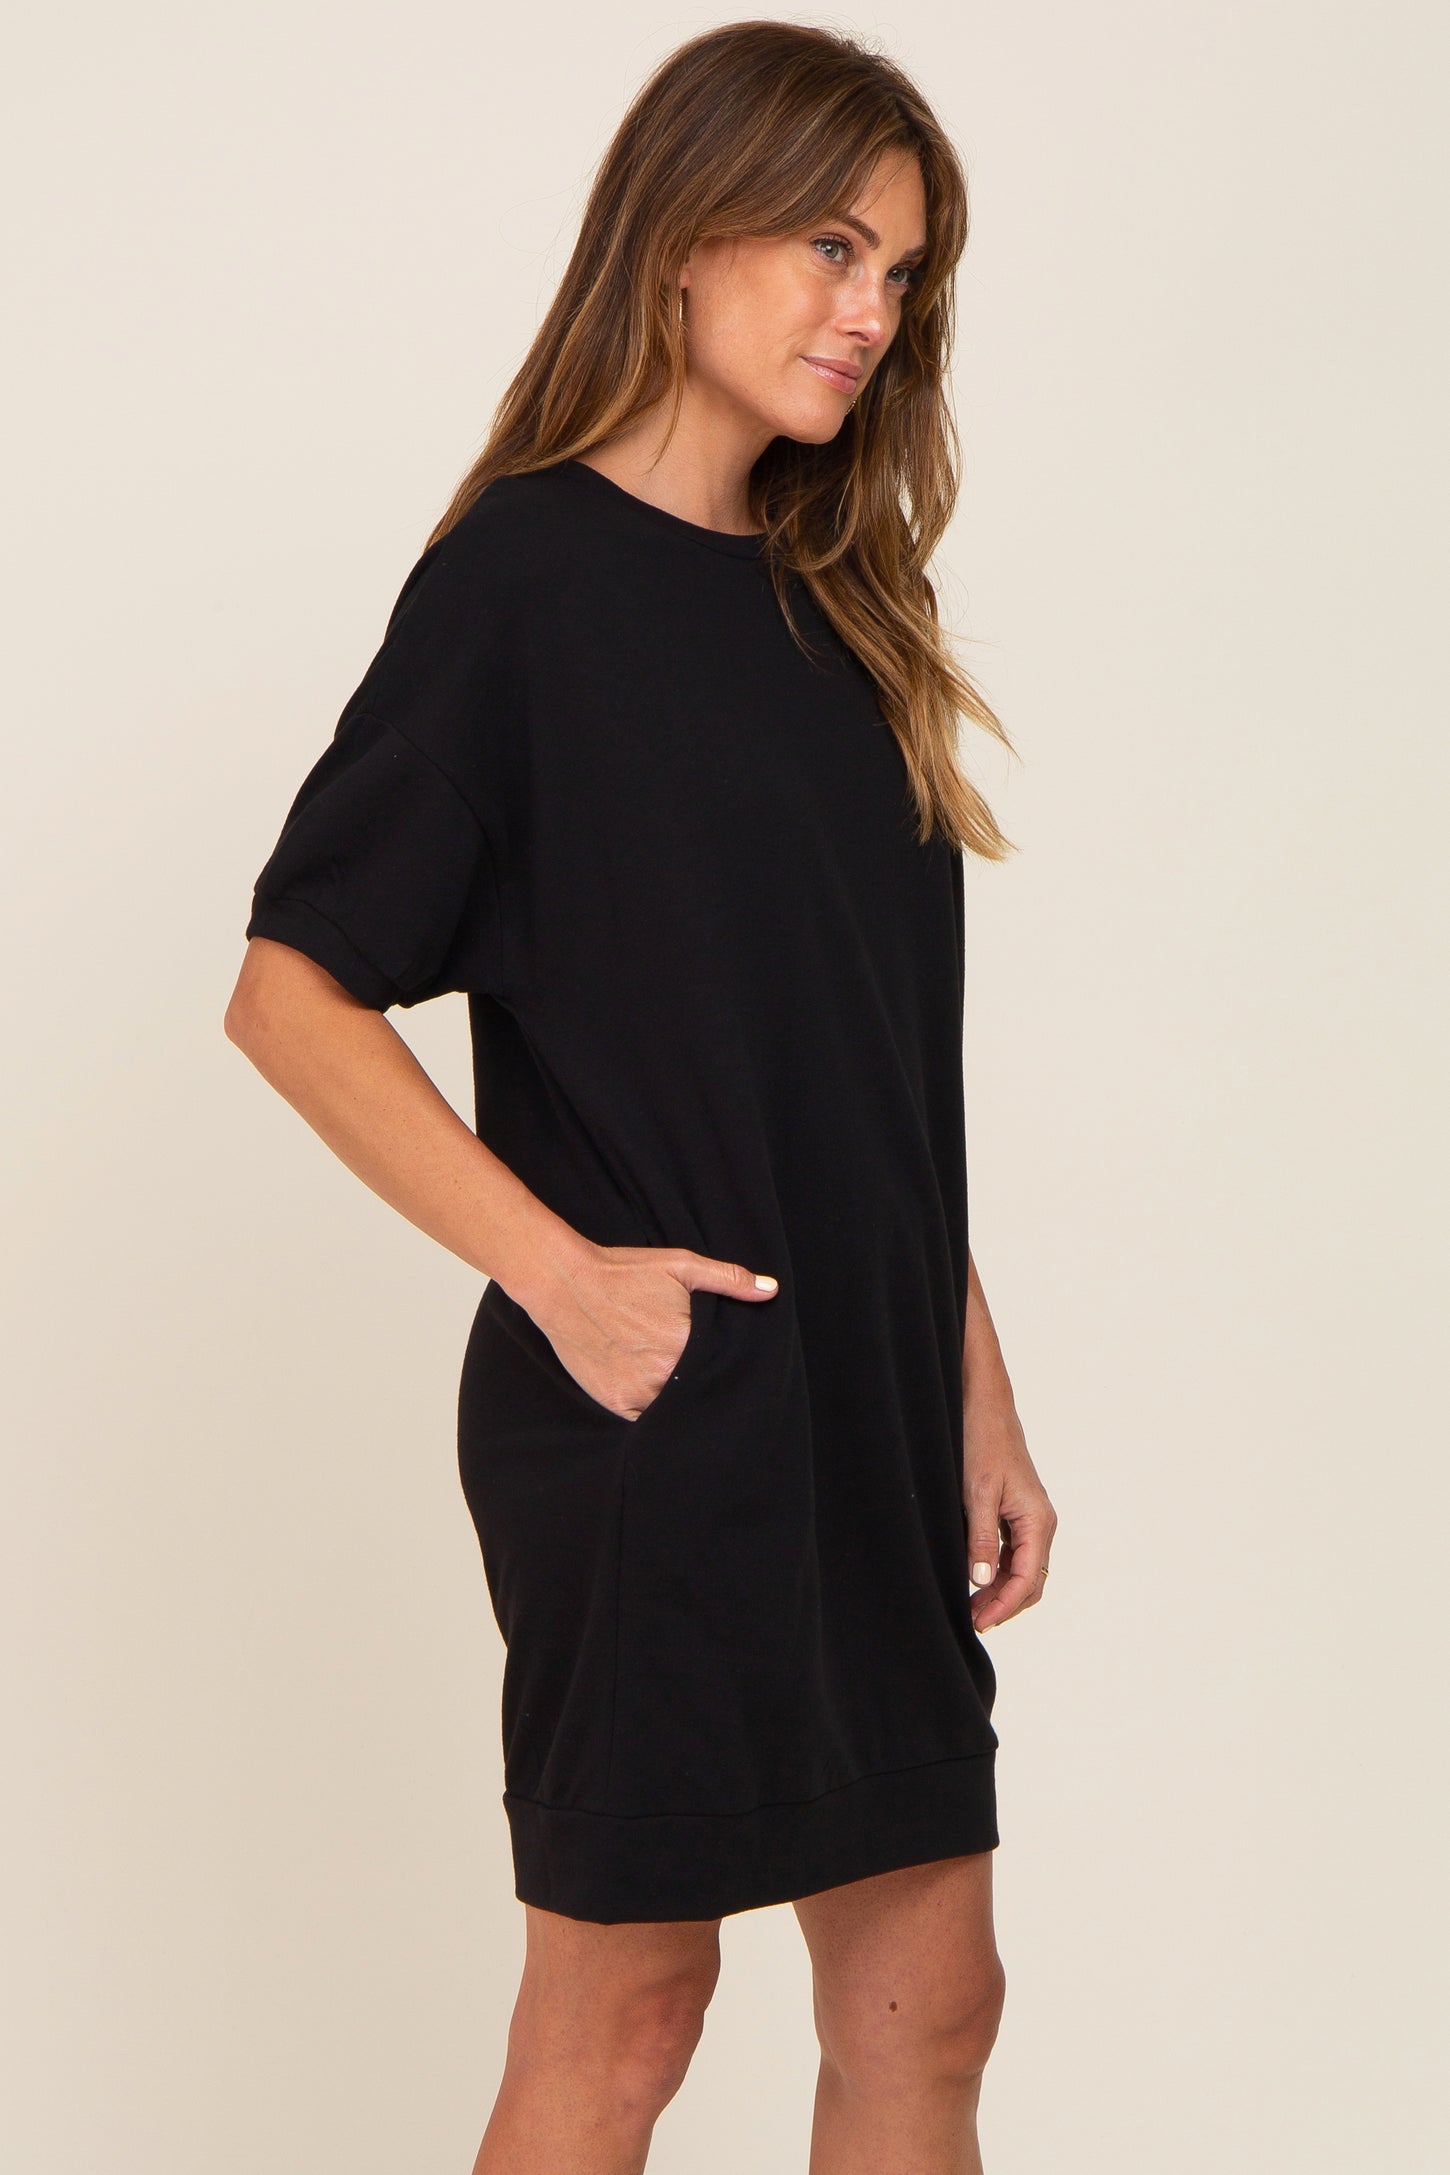 Black Short Sleeve Oversized T-Shirt Dress